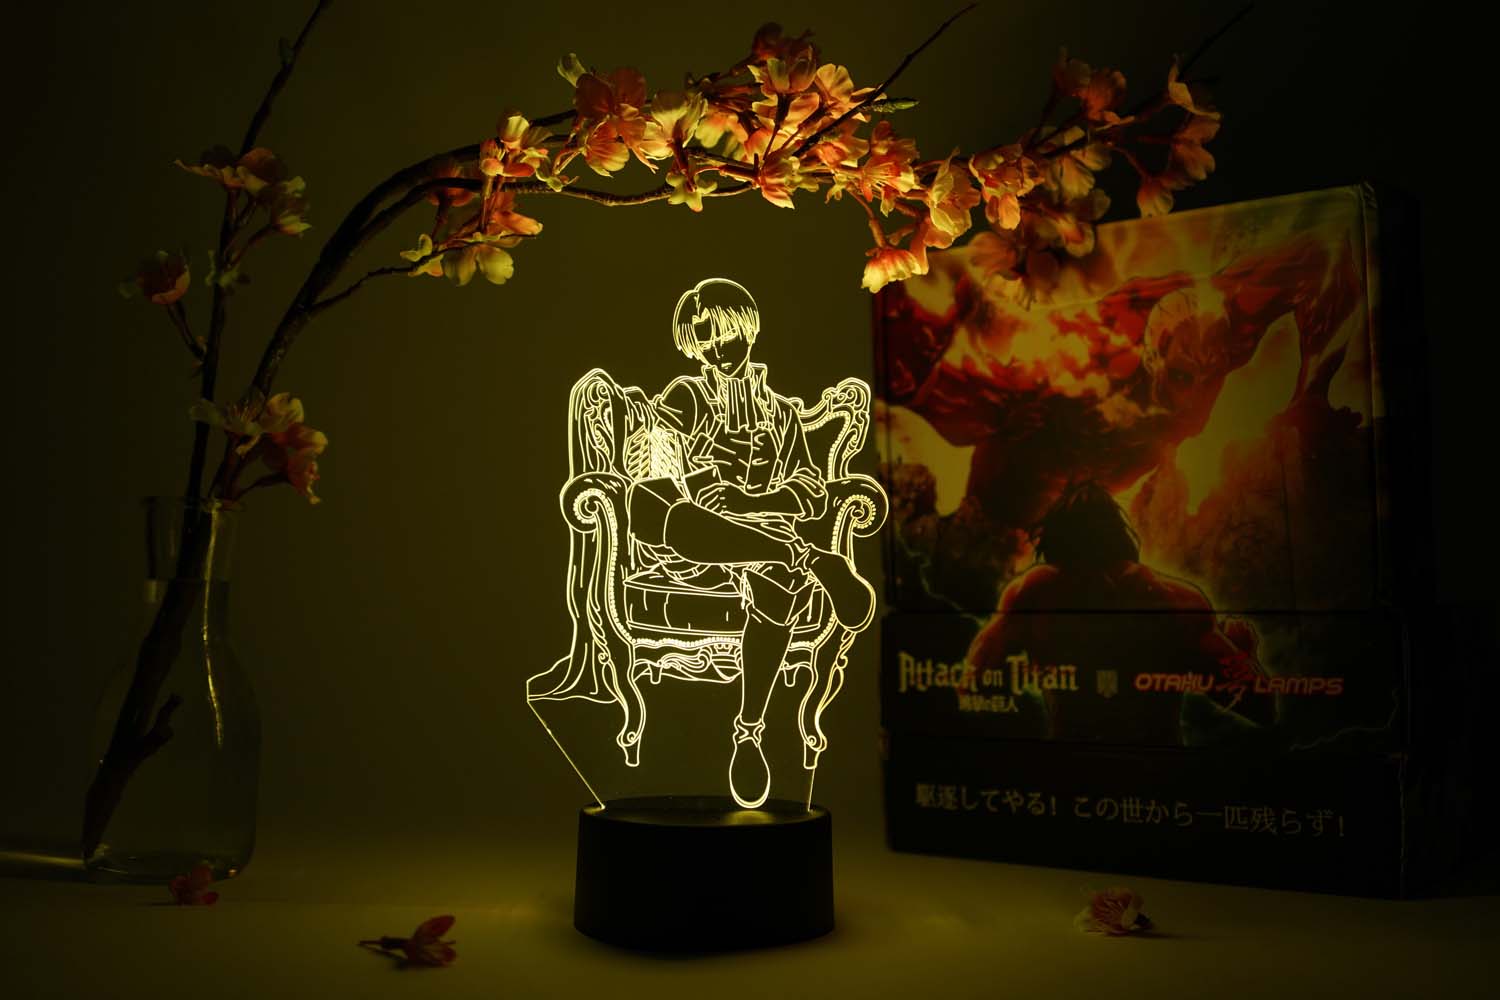 Levi King Otaku Lamp (Attack on Titan)